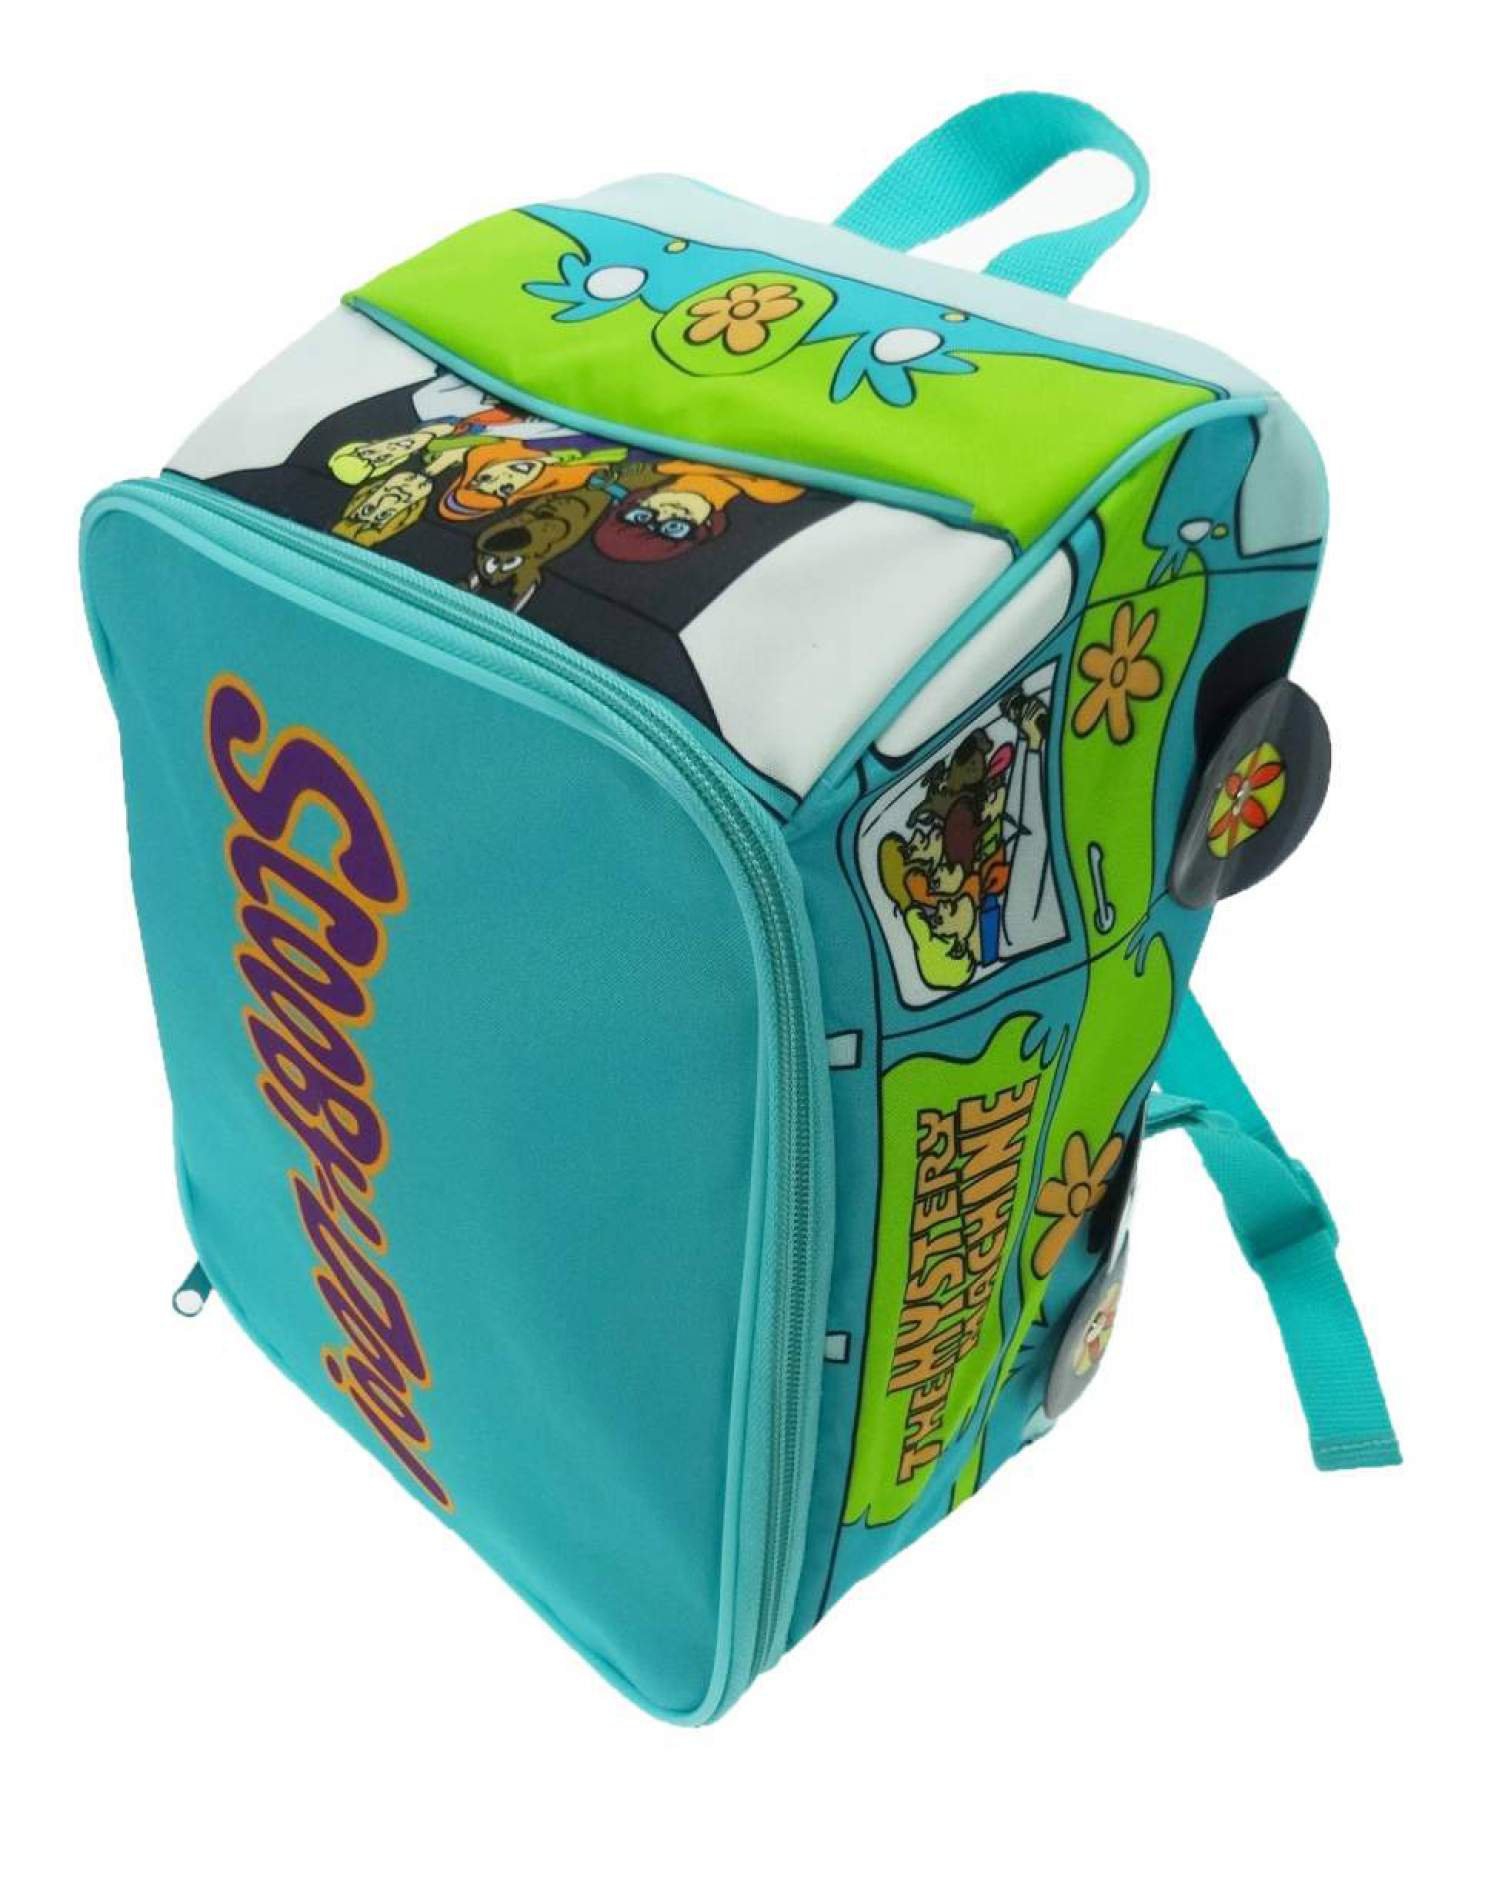 Scooby Doo 'Mistery Machine' Novelty School Bag Rucksack Backpack